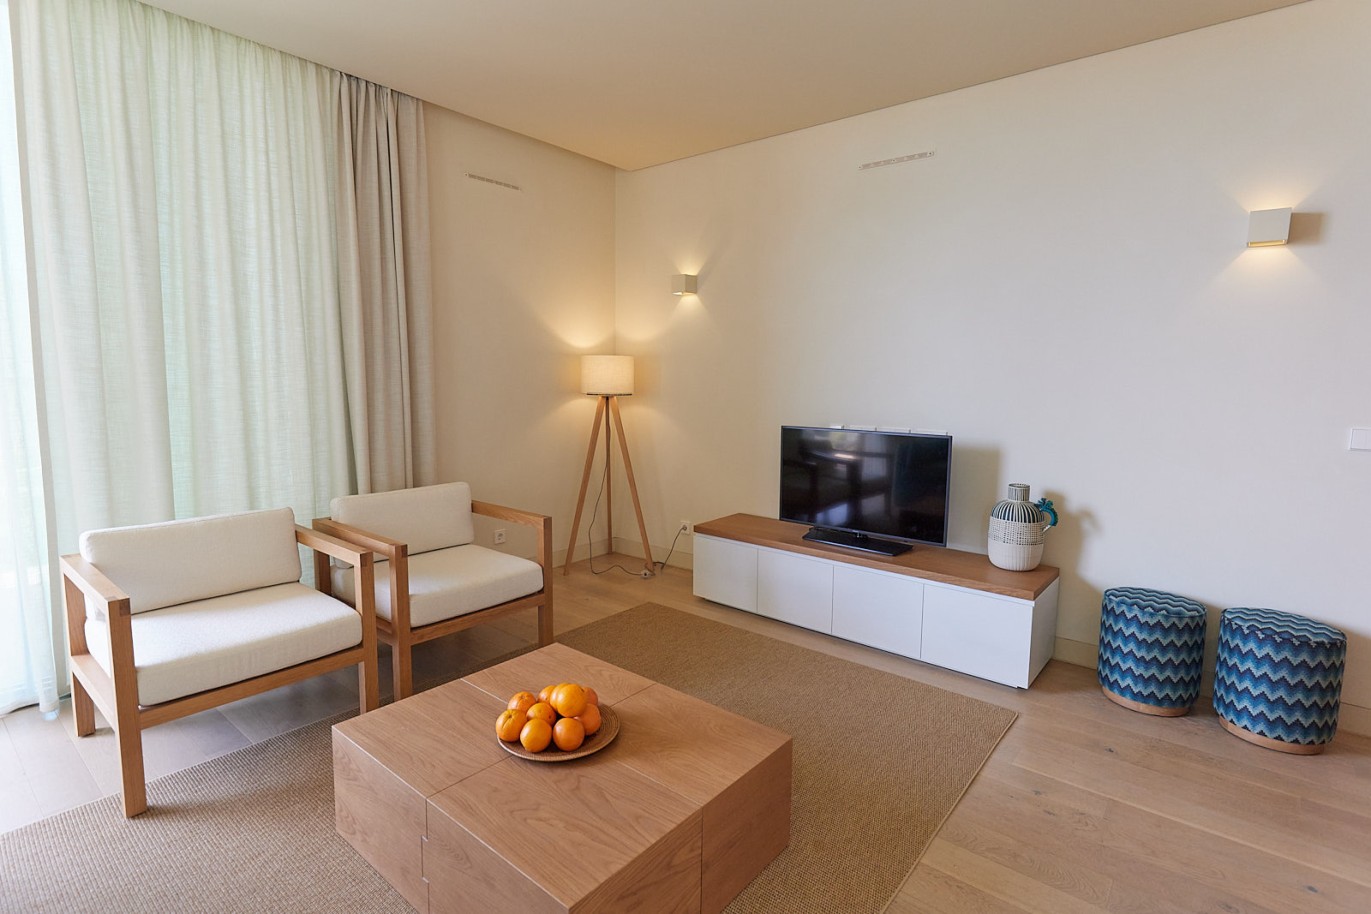 2 bedroom apartment in resort, for sale in Porches, Algarve_230644